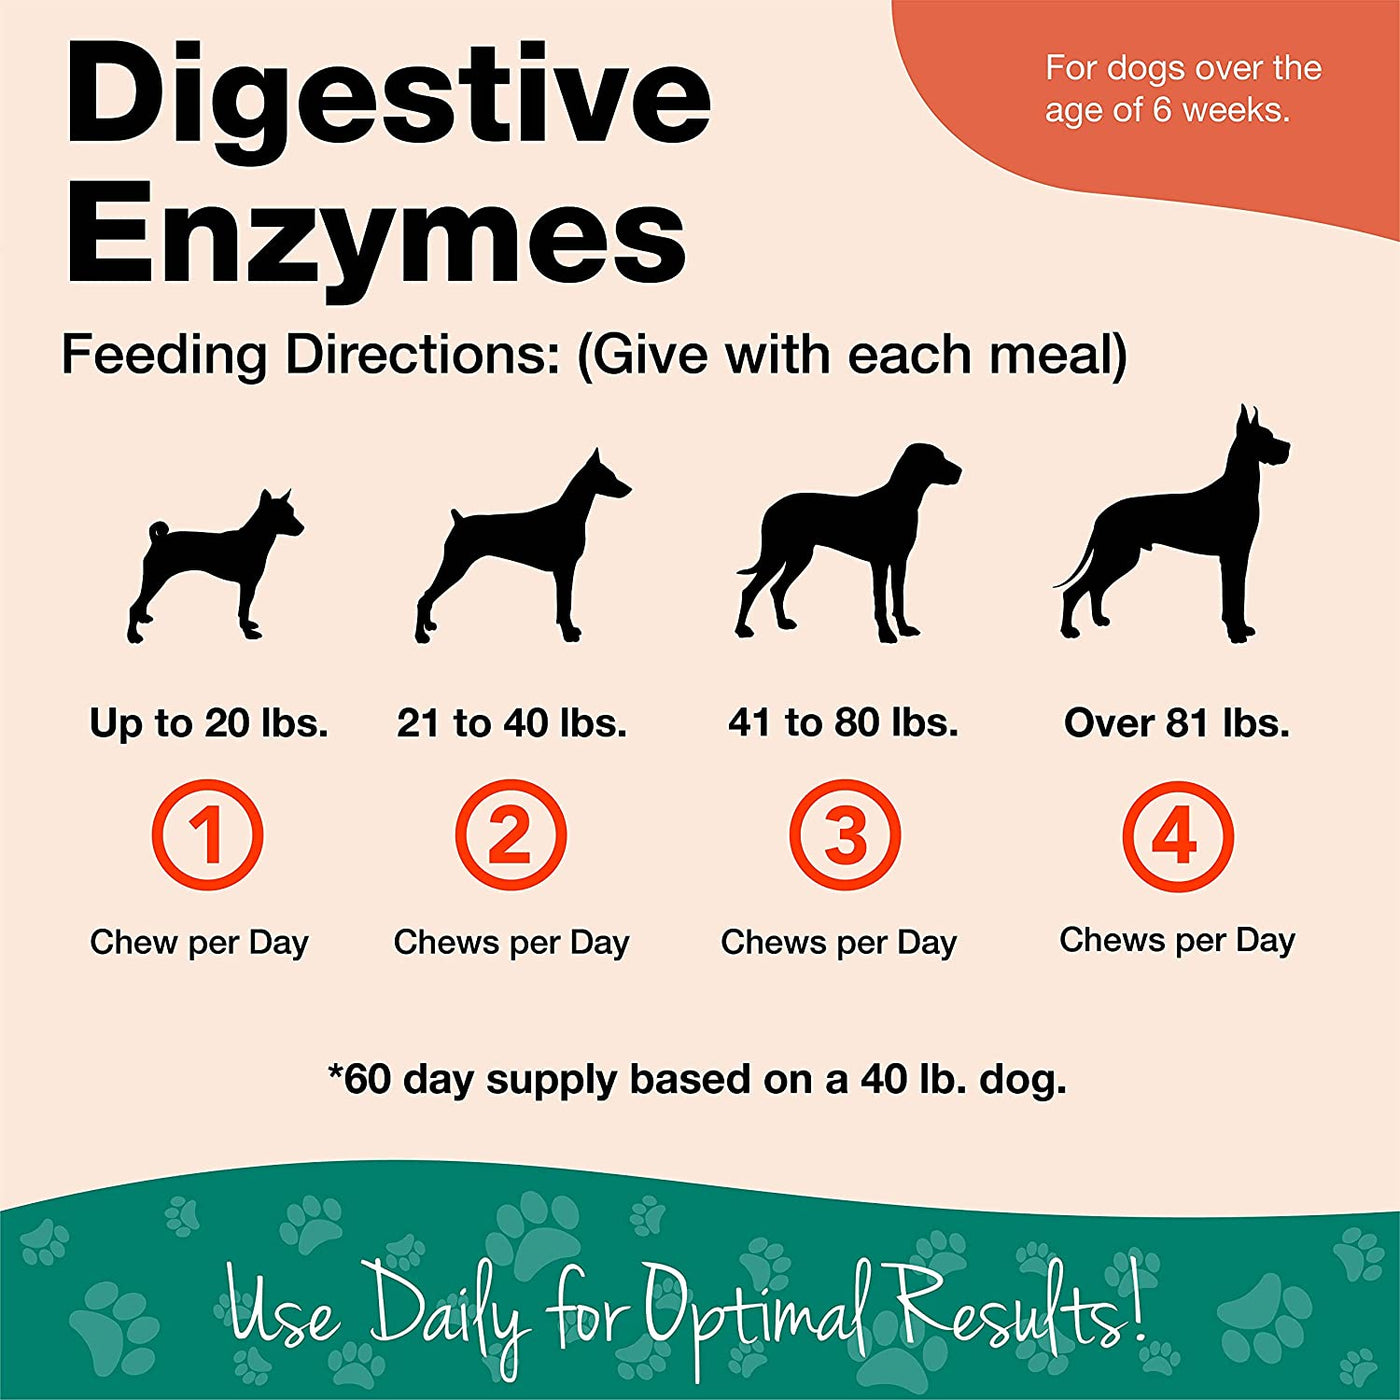 NaturVet -  Digestive Enzymes with Prebiotics & Probiotics Chewable Tablets